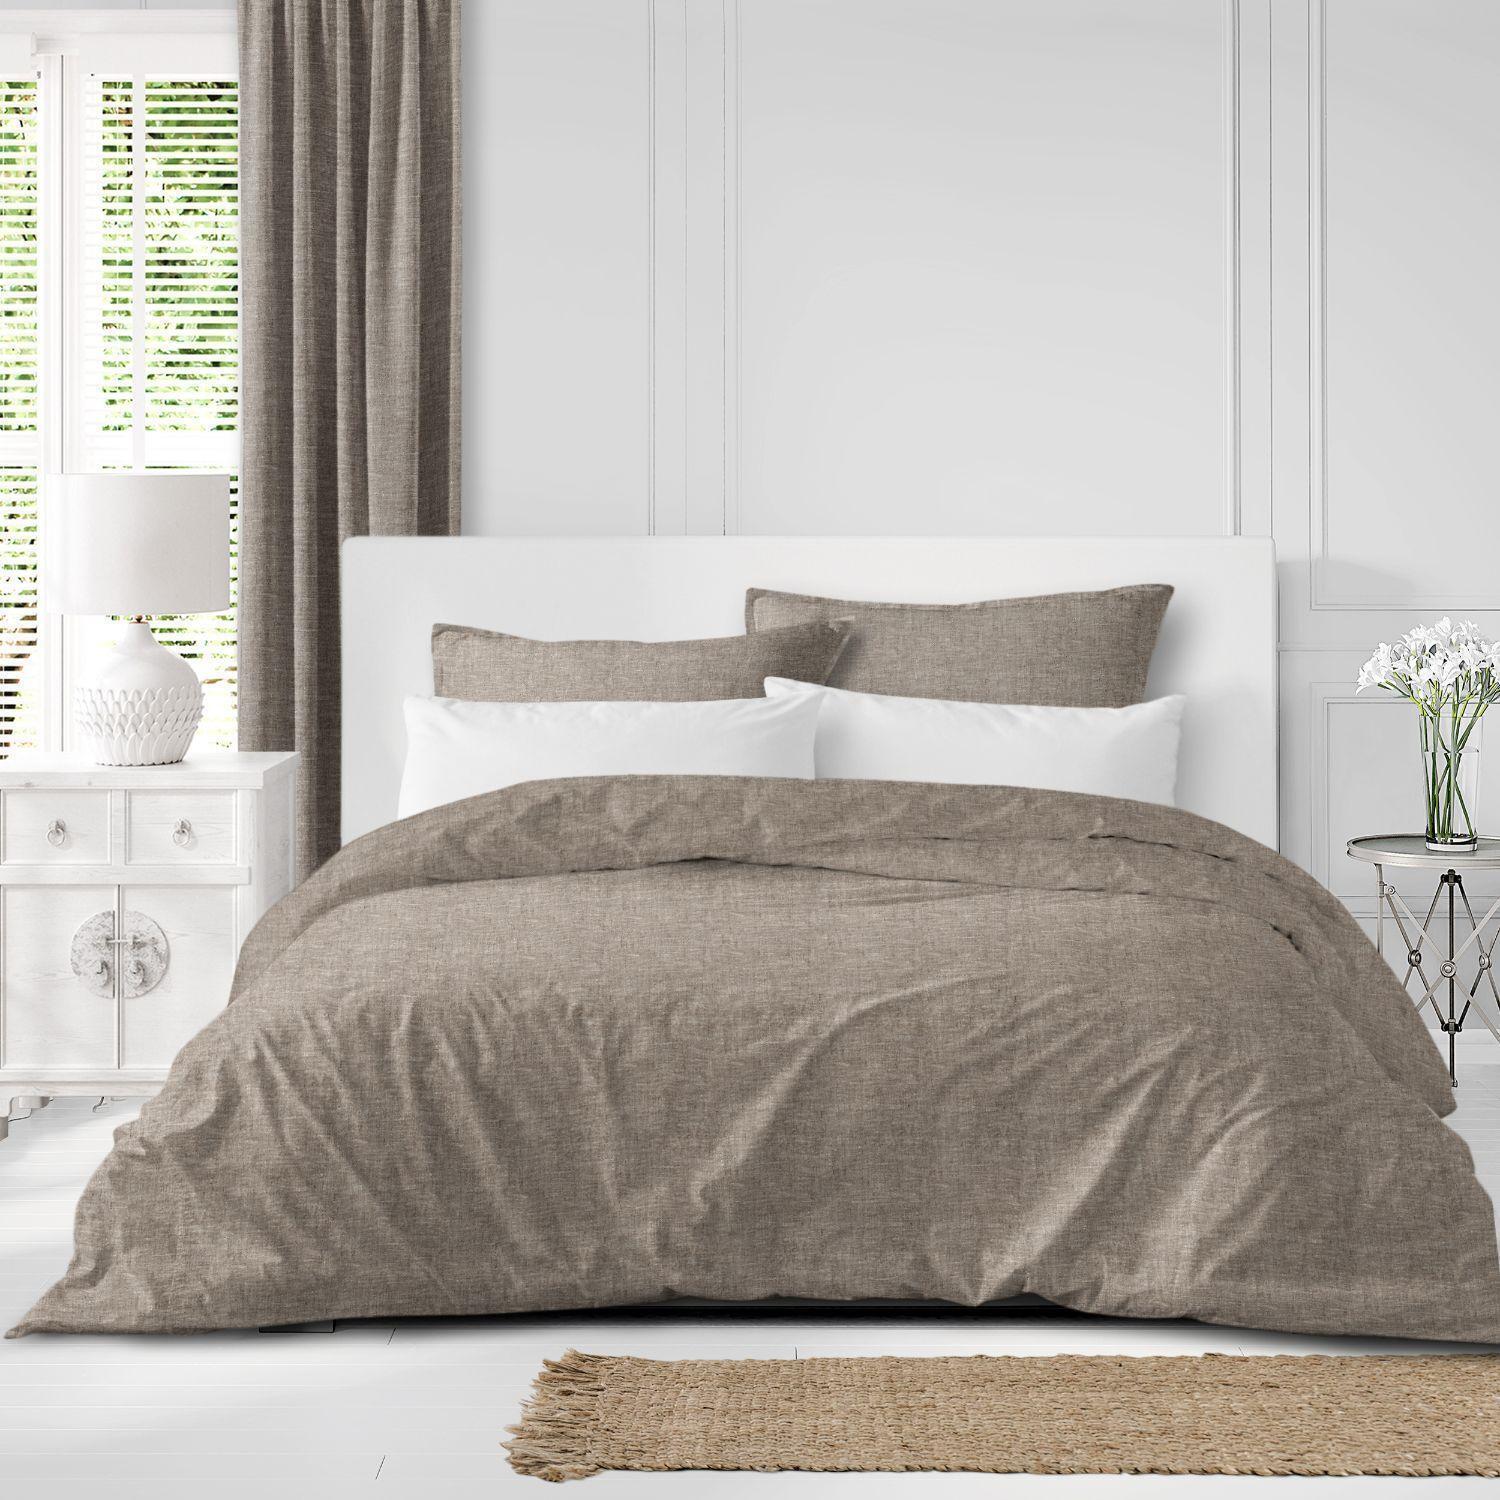 Set of 3 Natural Brown Solid Comforter with Pillow Shams - Super King alternate image